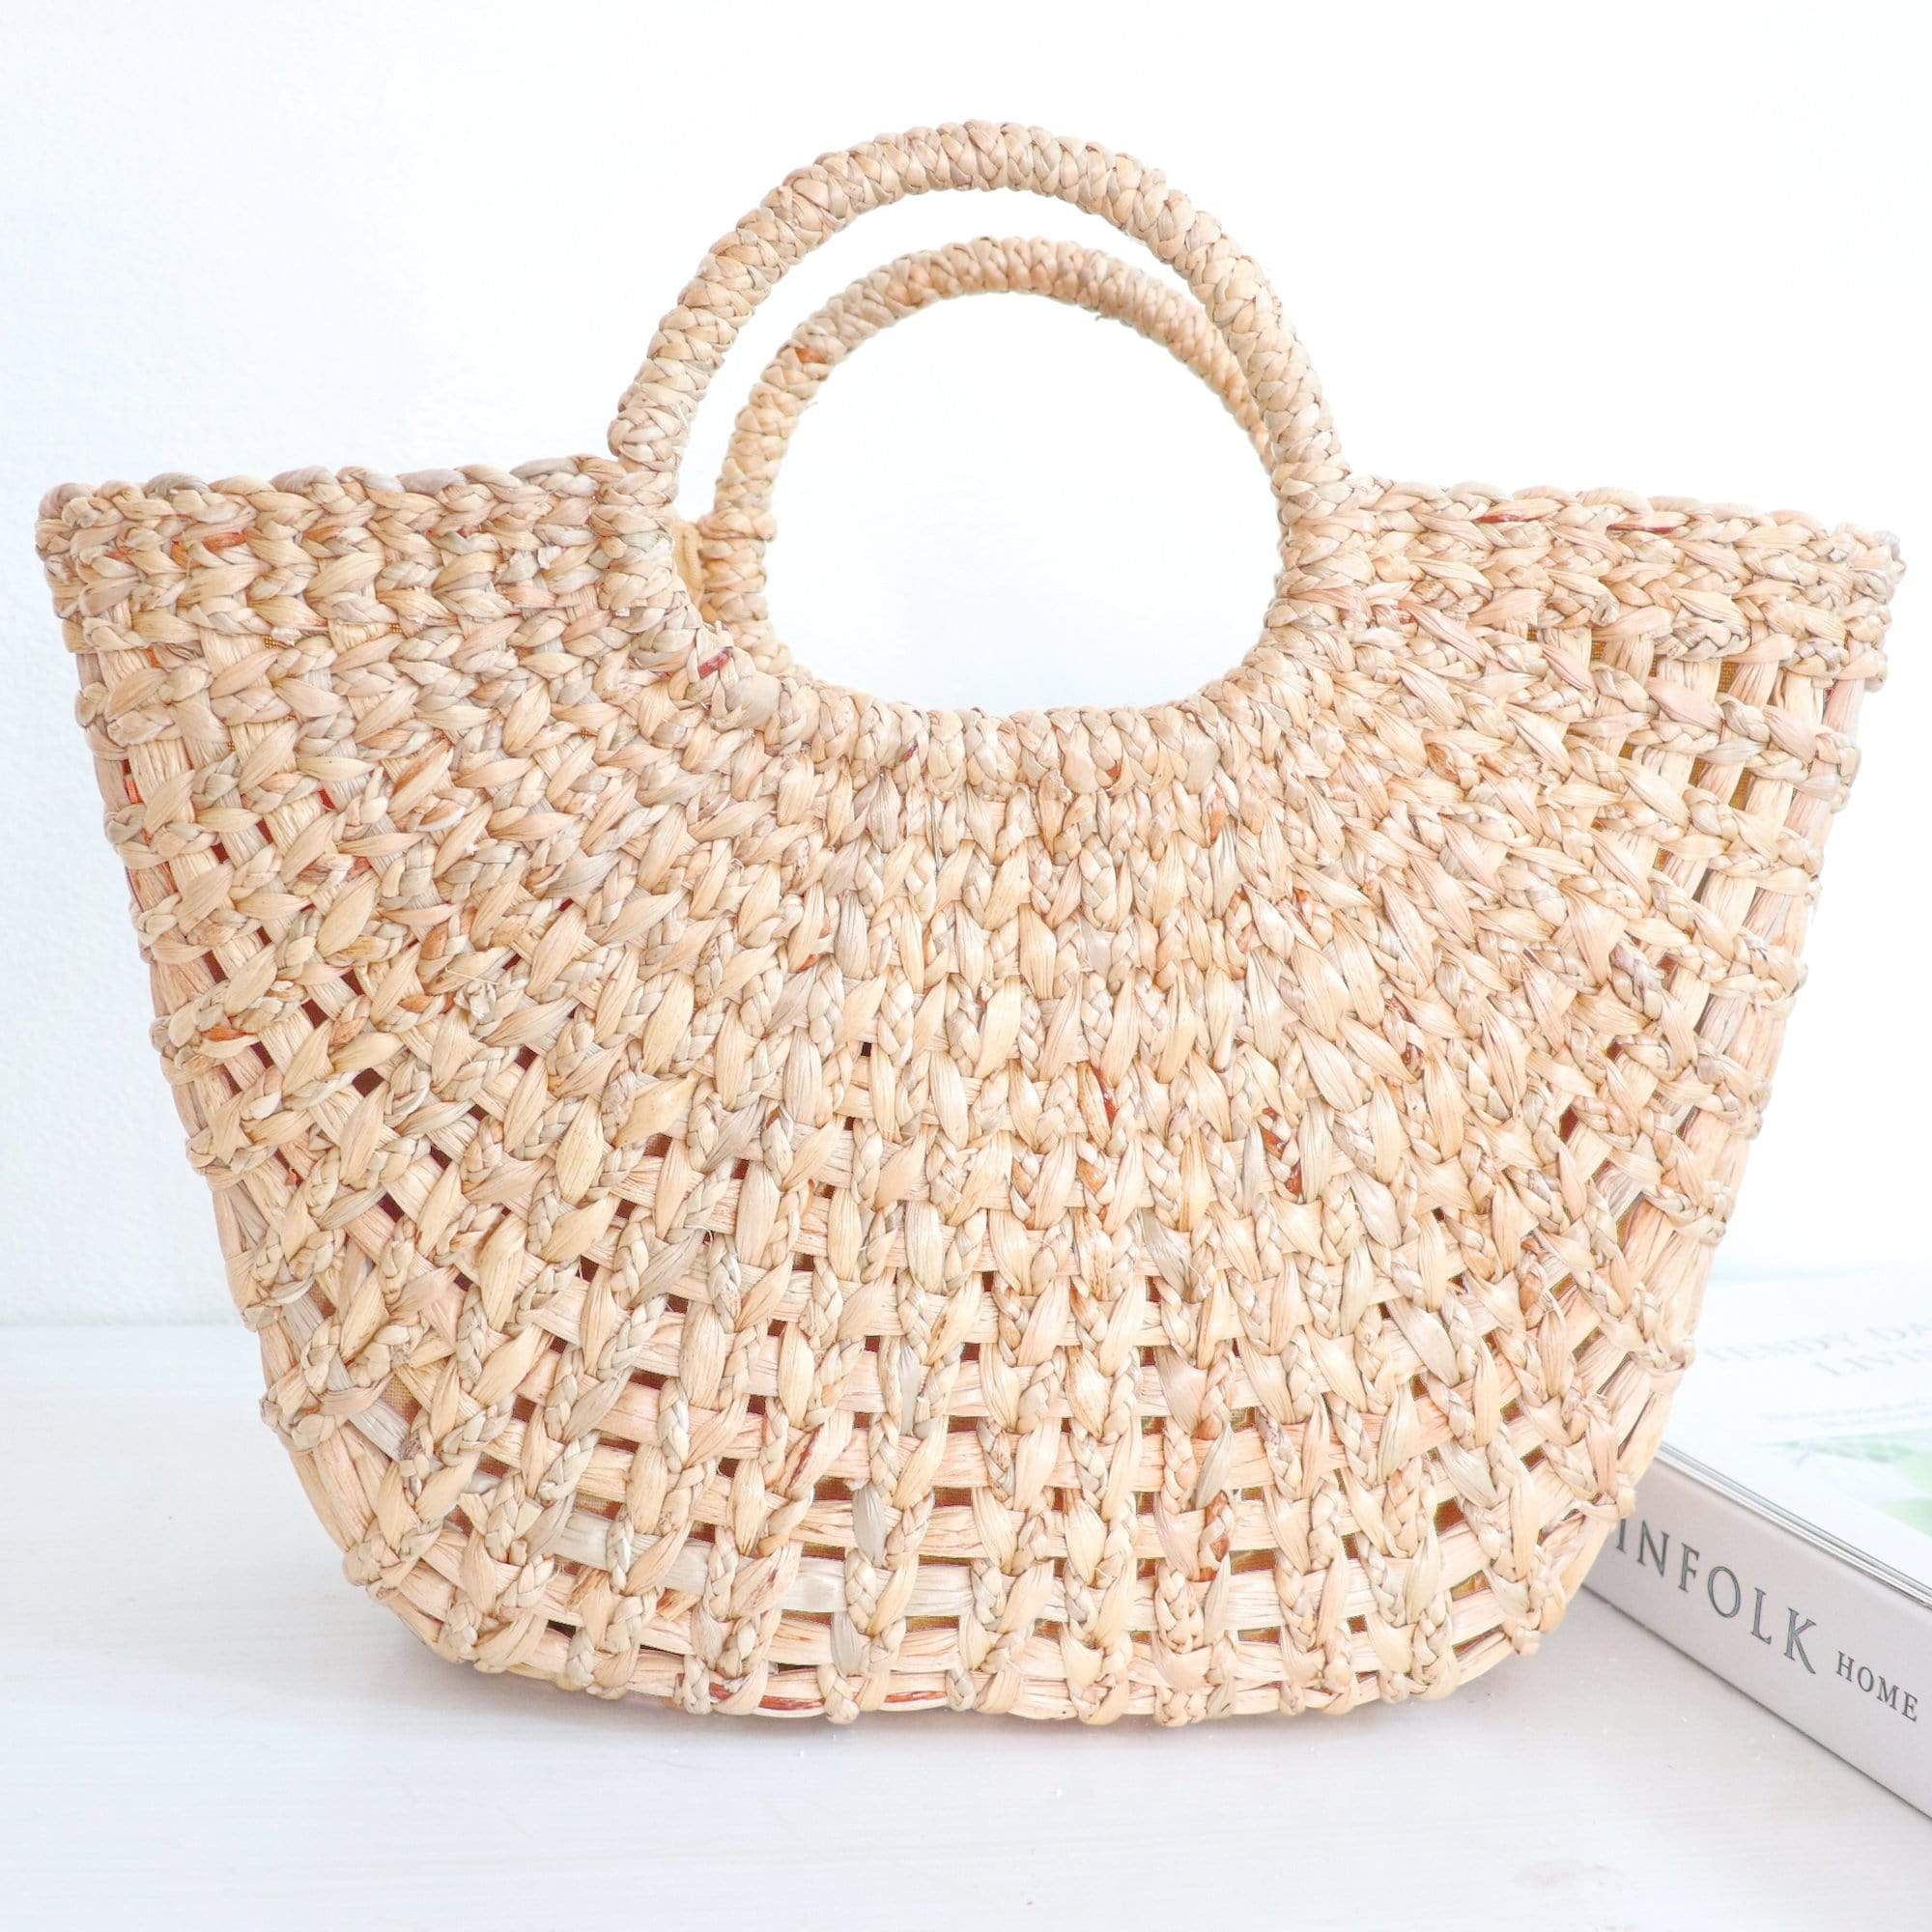 TALAY- Basket Bag